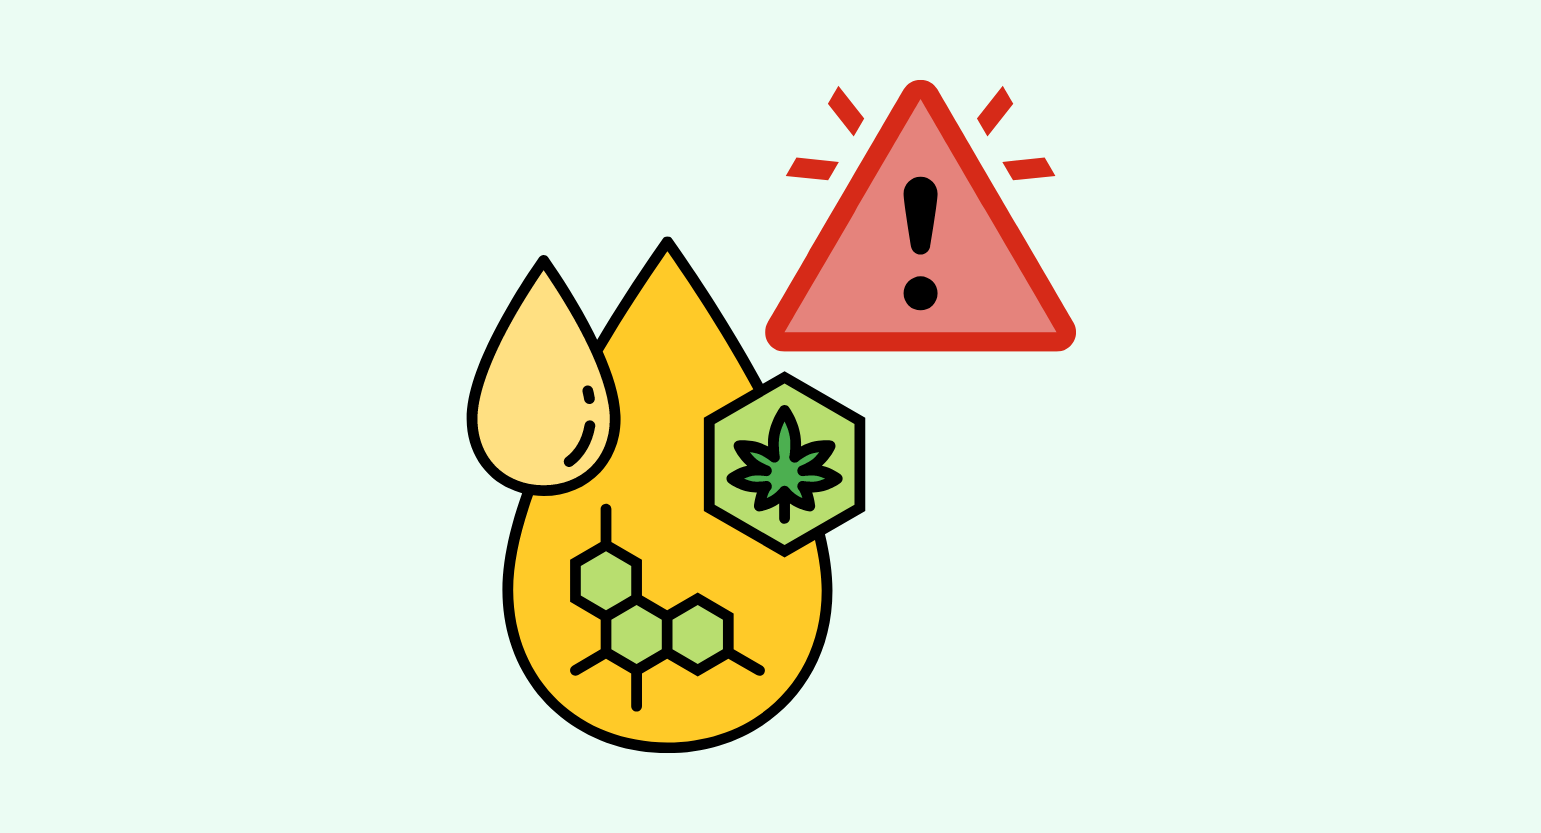 Illustration of a CBD oil drop